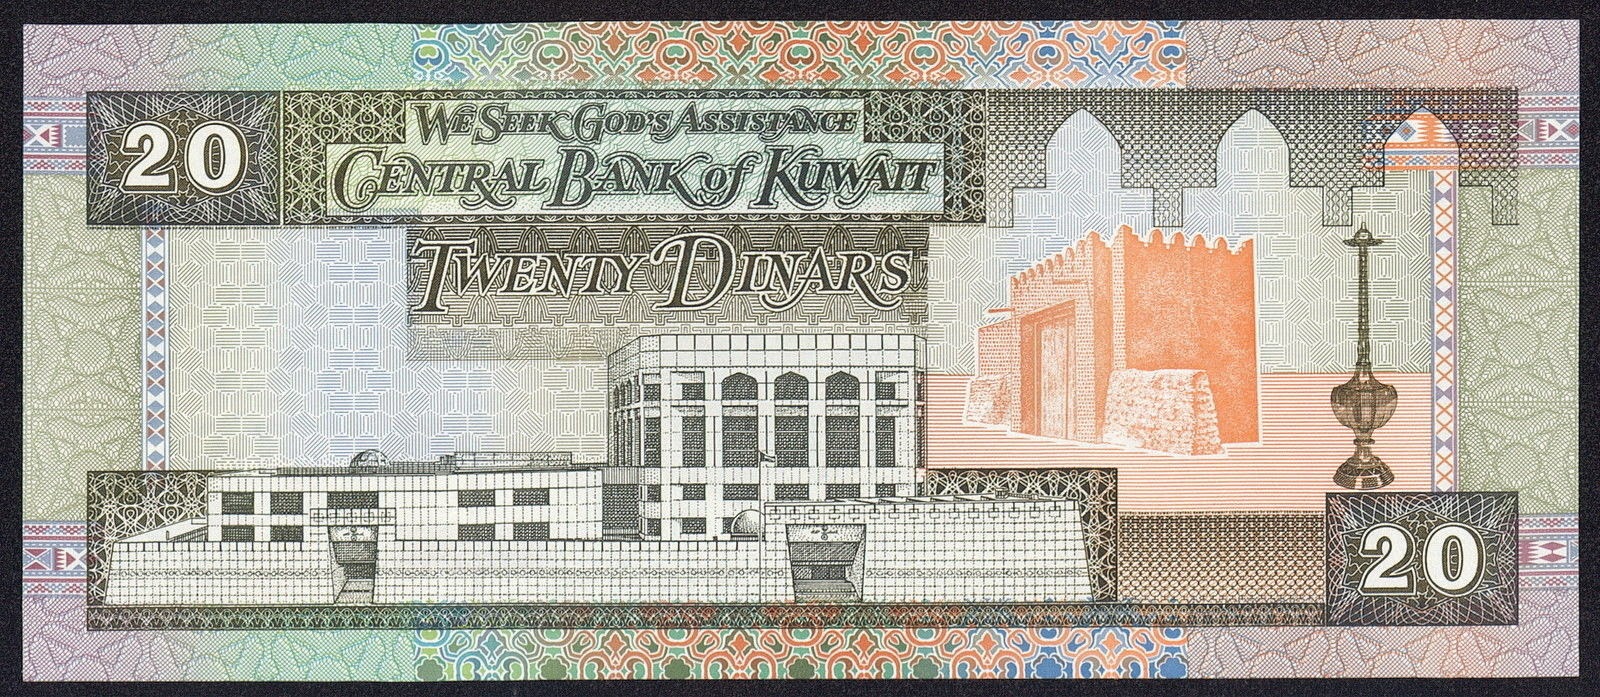 Kuwait Currency 20 Kuwaiti Dinar banknote 1994